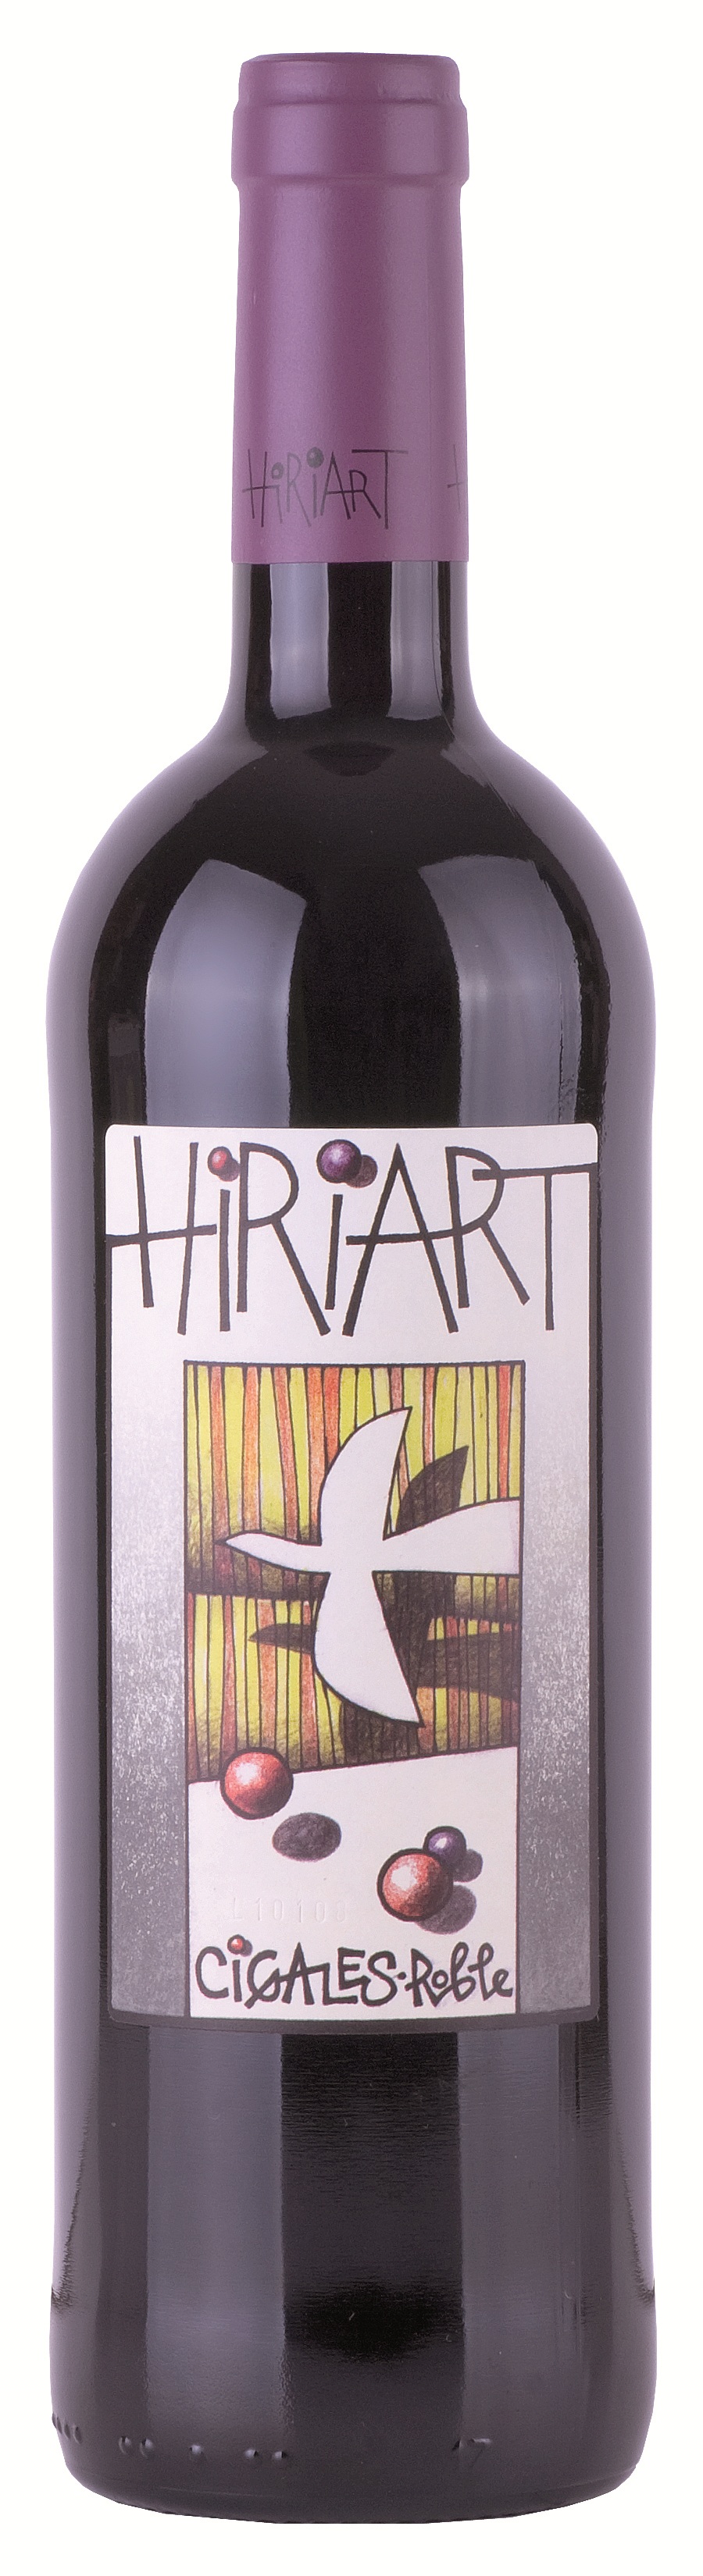 Imagen de la botella de Vino Hiriart Tinto Roble